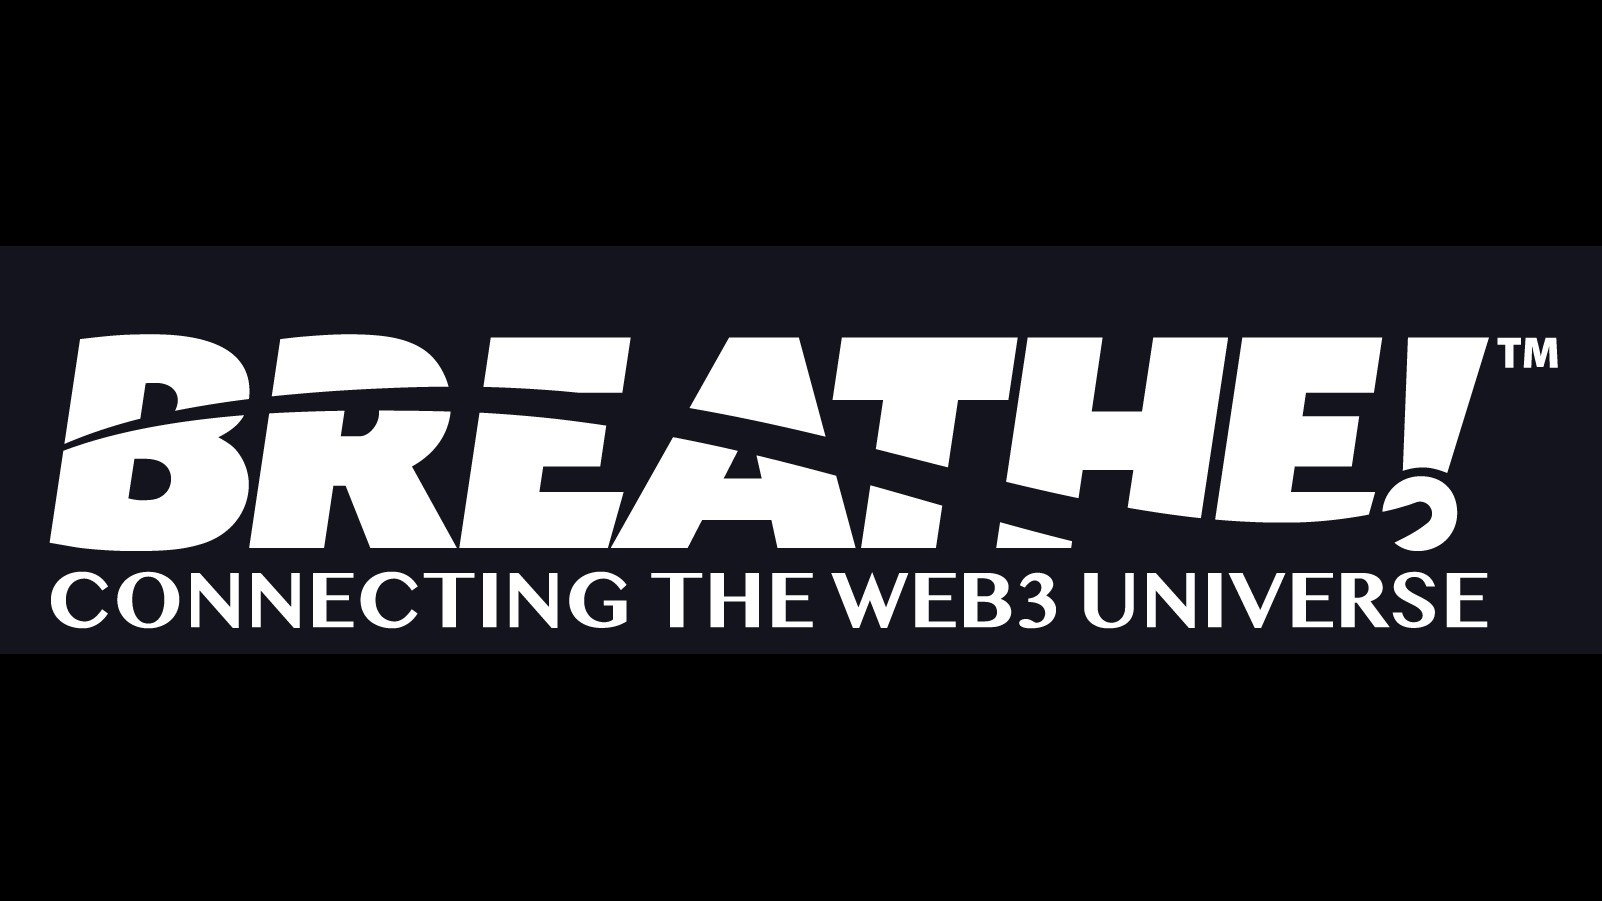 Breathe! Web3 is coming to Las Vegas